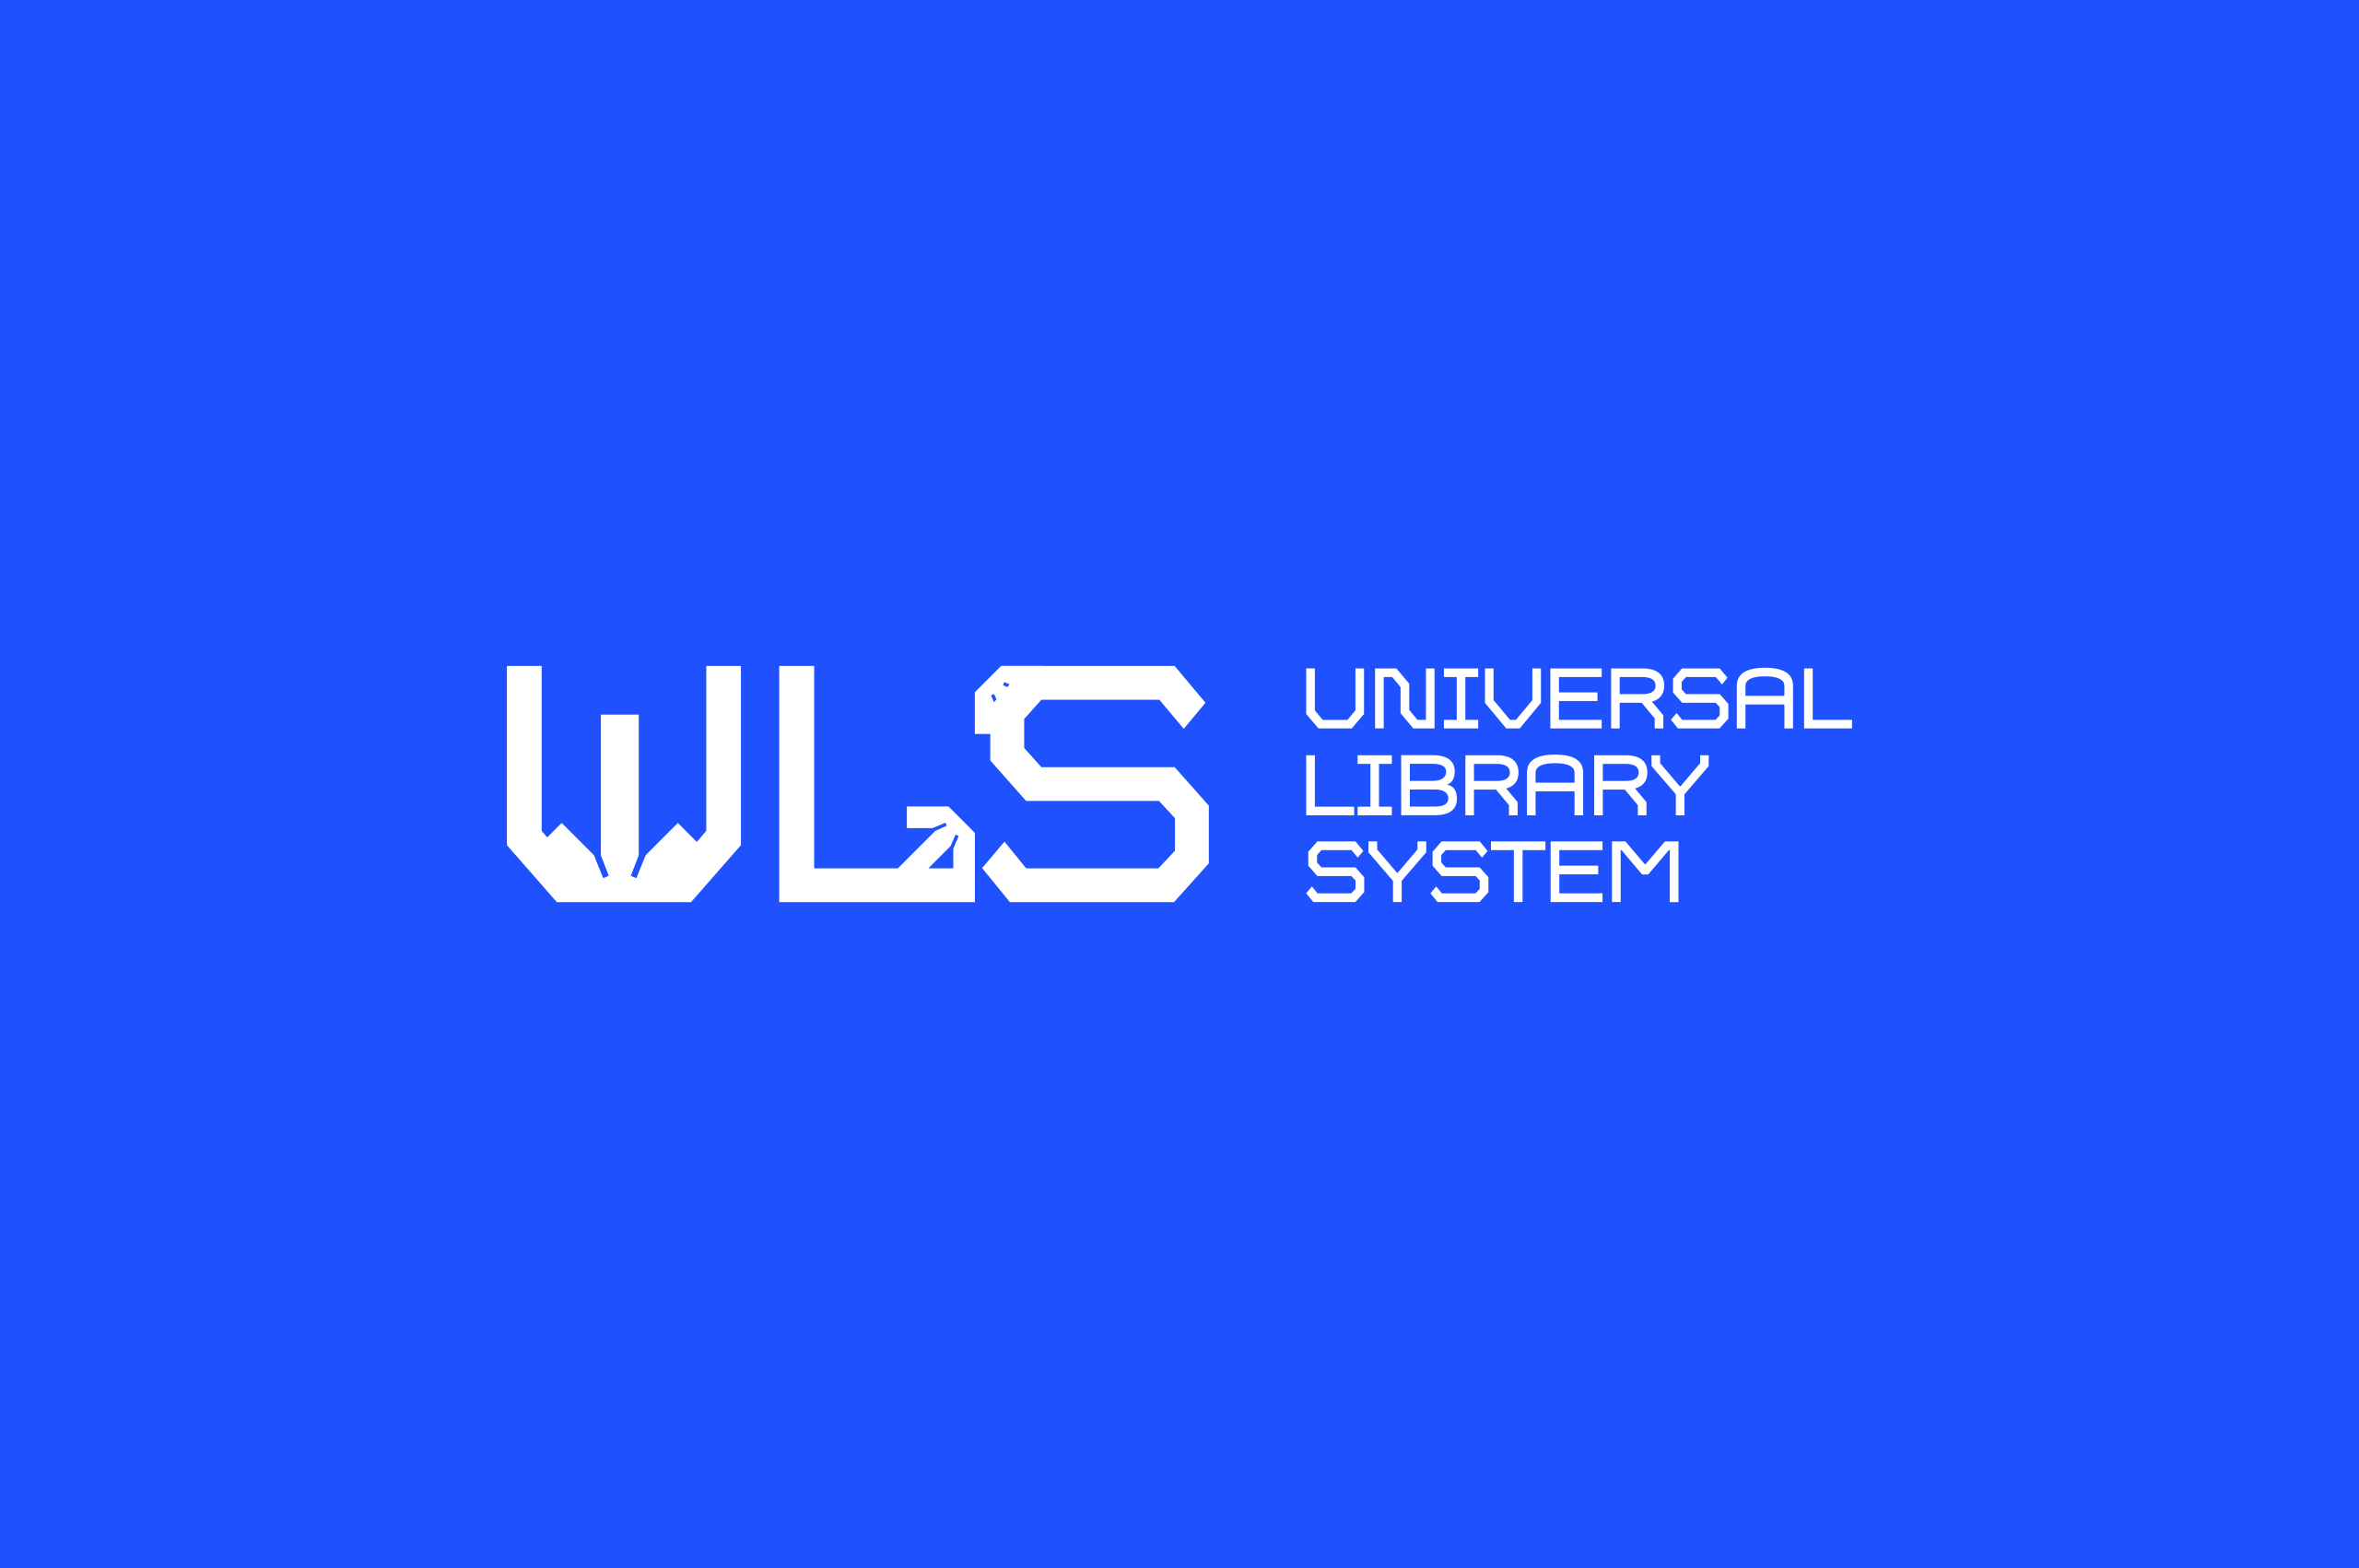 W-ULS-MF-4-1